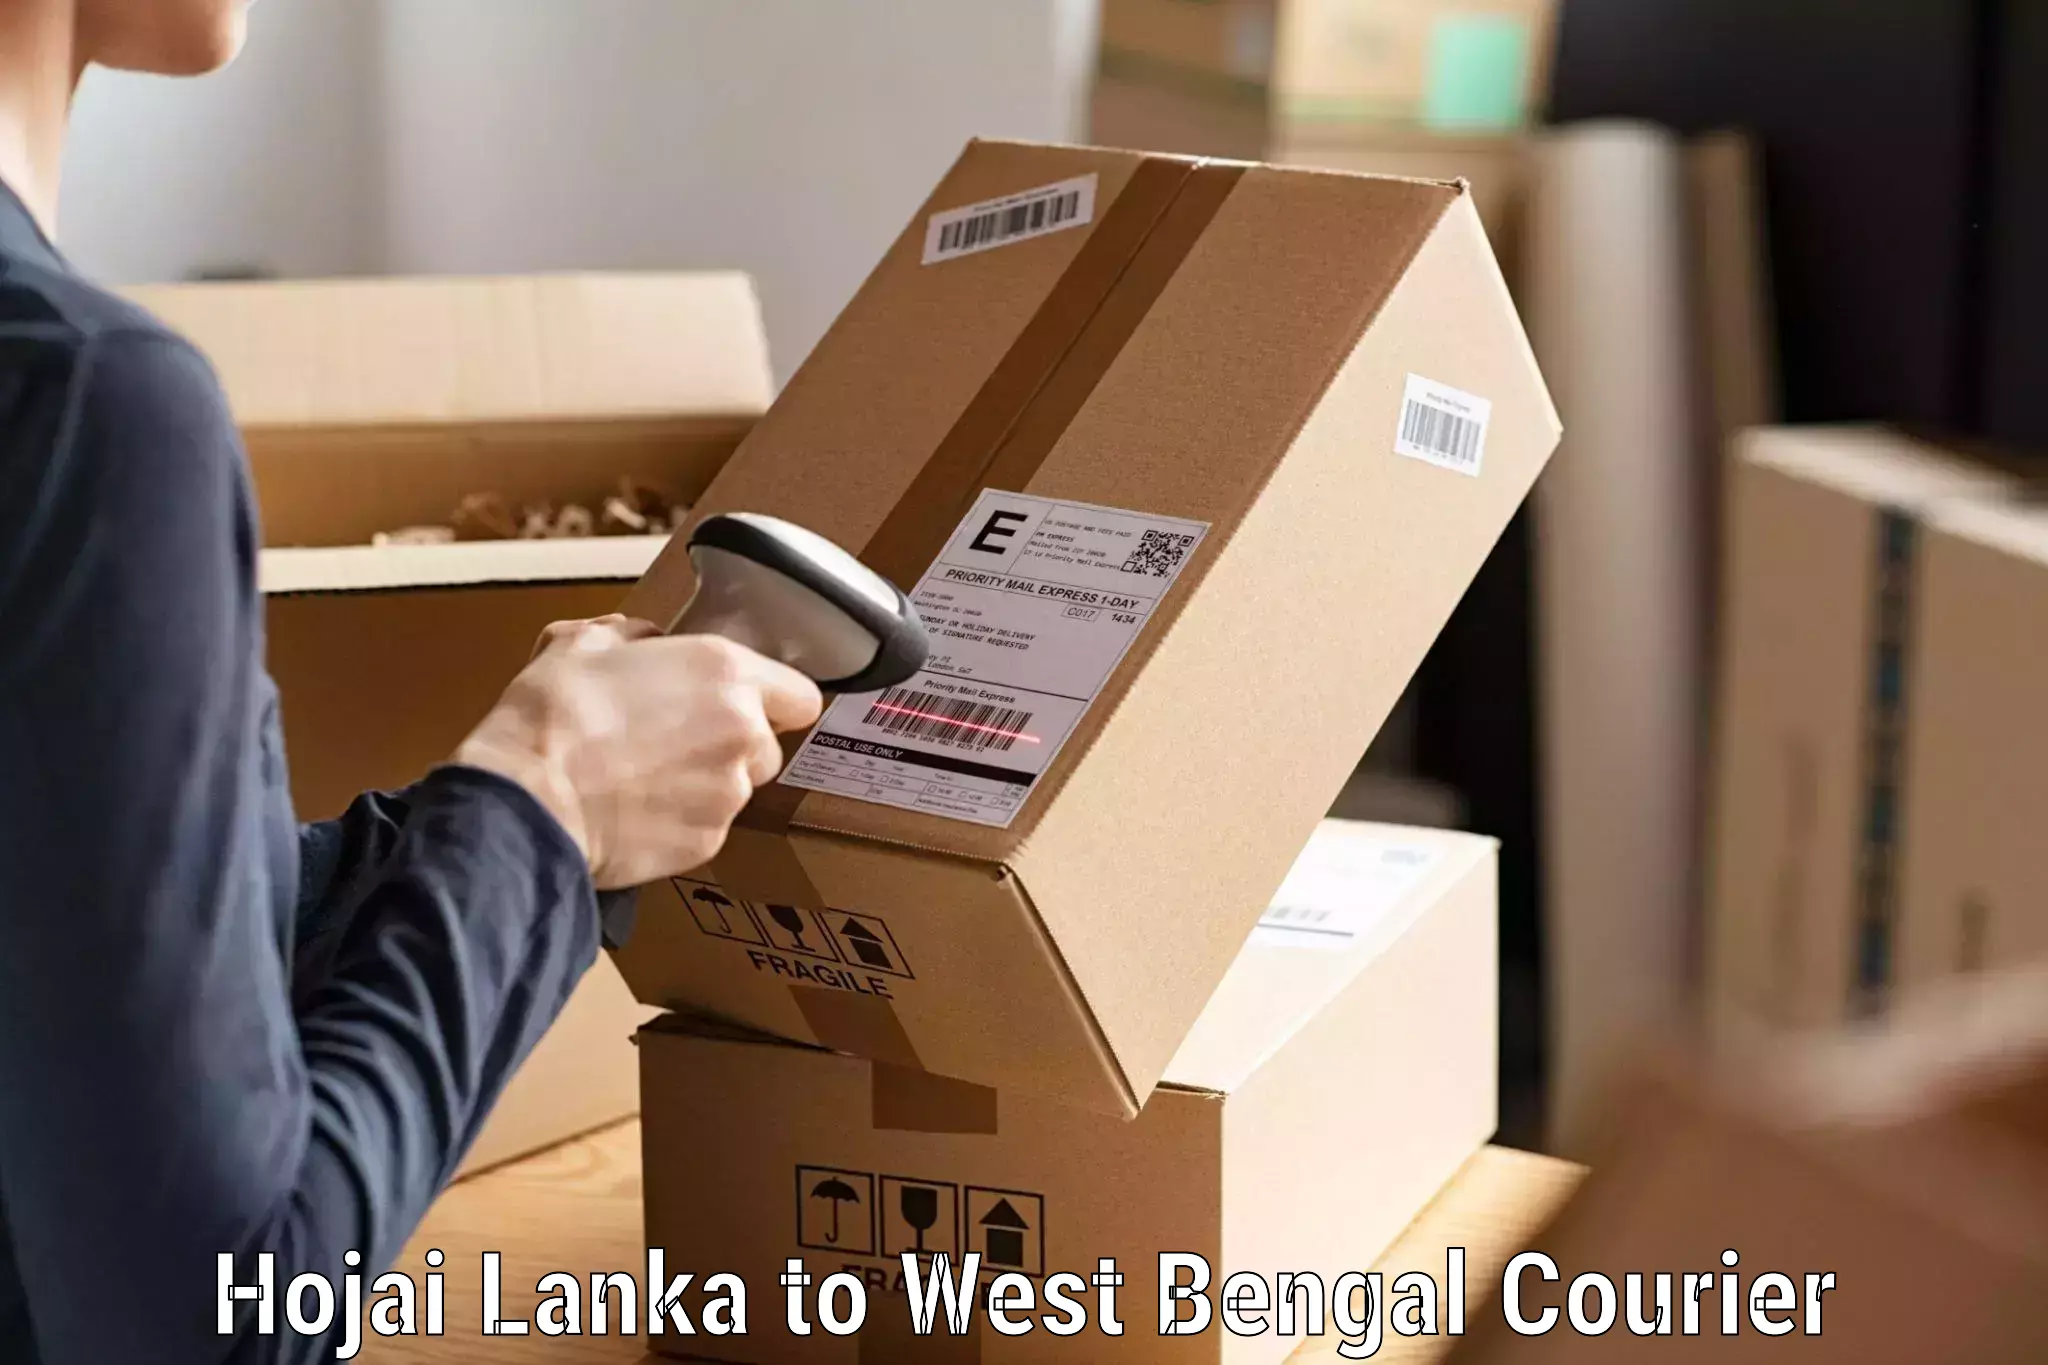 Long distance courier Hojai Lanka to Kolkata Port